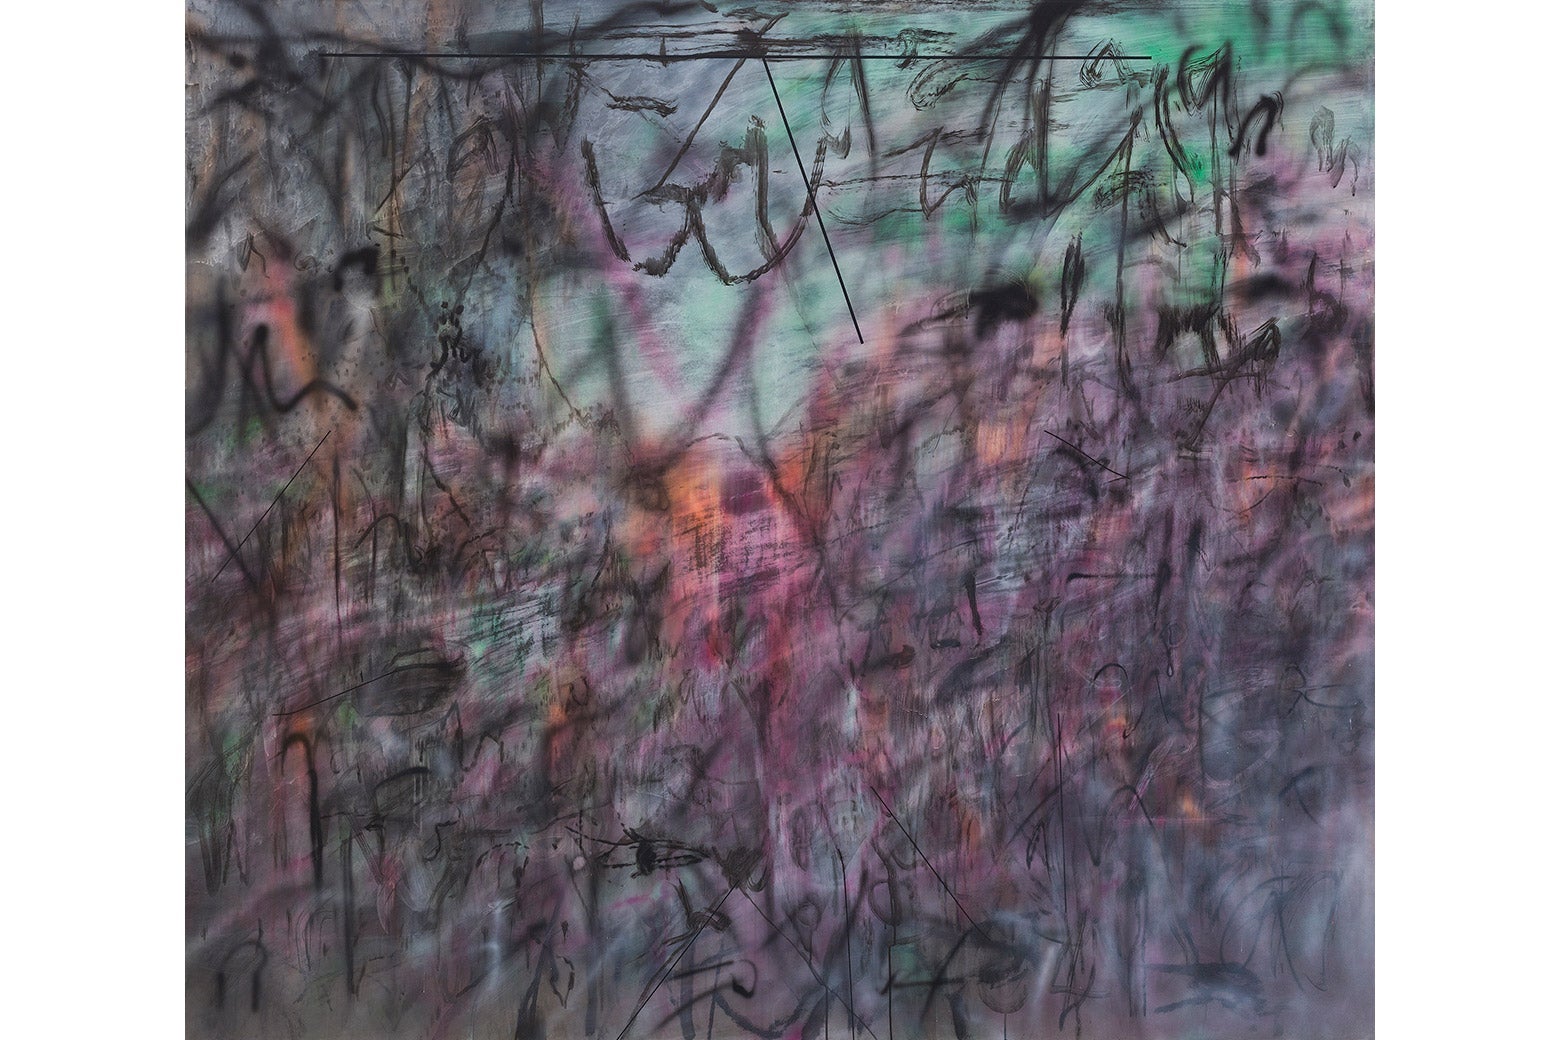 Julie Mehretu, Conjured Parts (eye), Ferguson, 2016. Ink and acrylic on canvas, 84 x 96 inches (213.4 x 243.8 cm). 